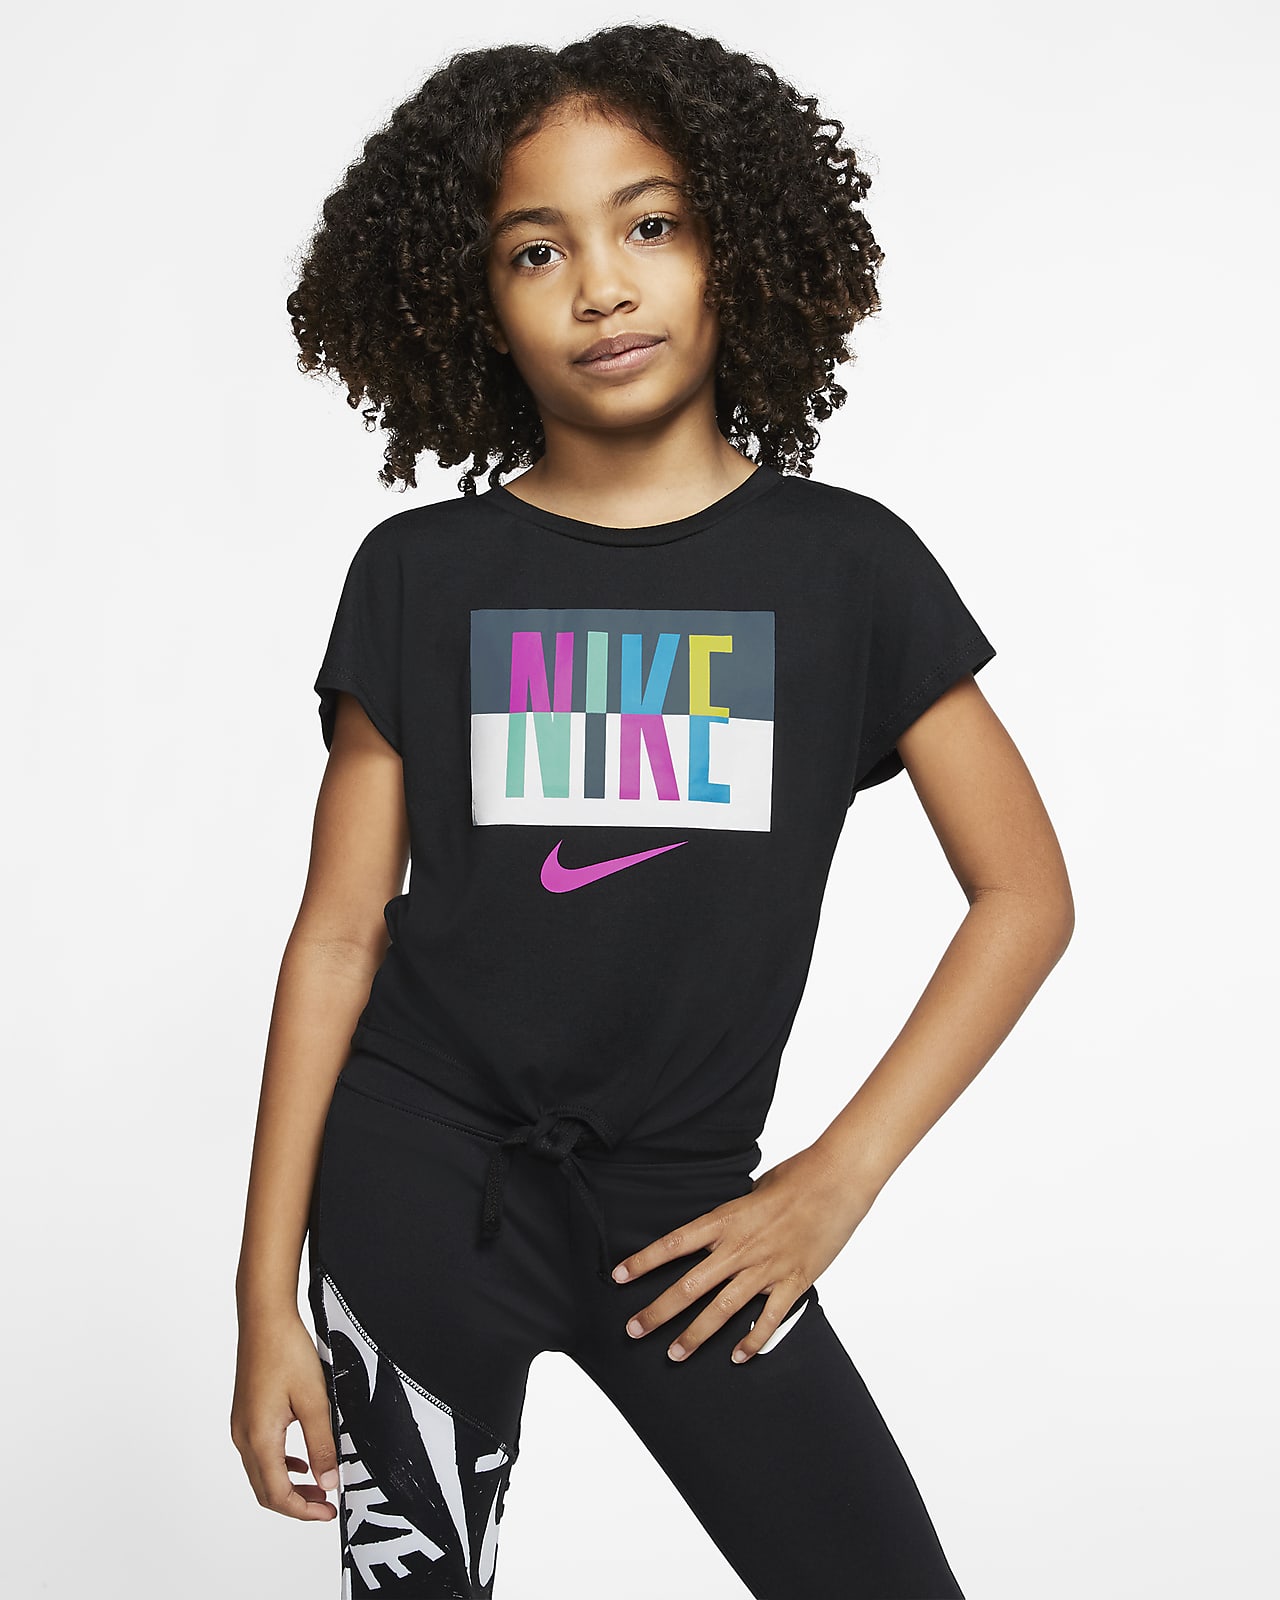 Nike Little Kids' Short-Sleeve Top 